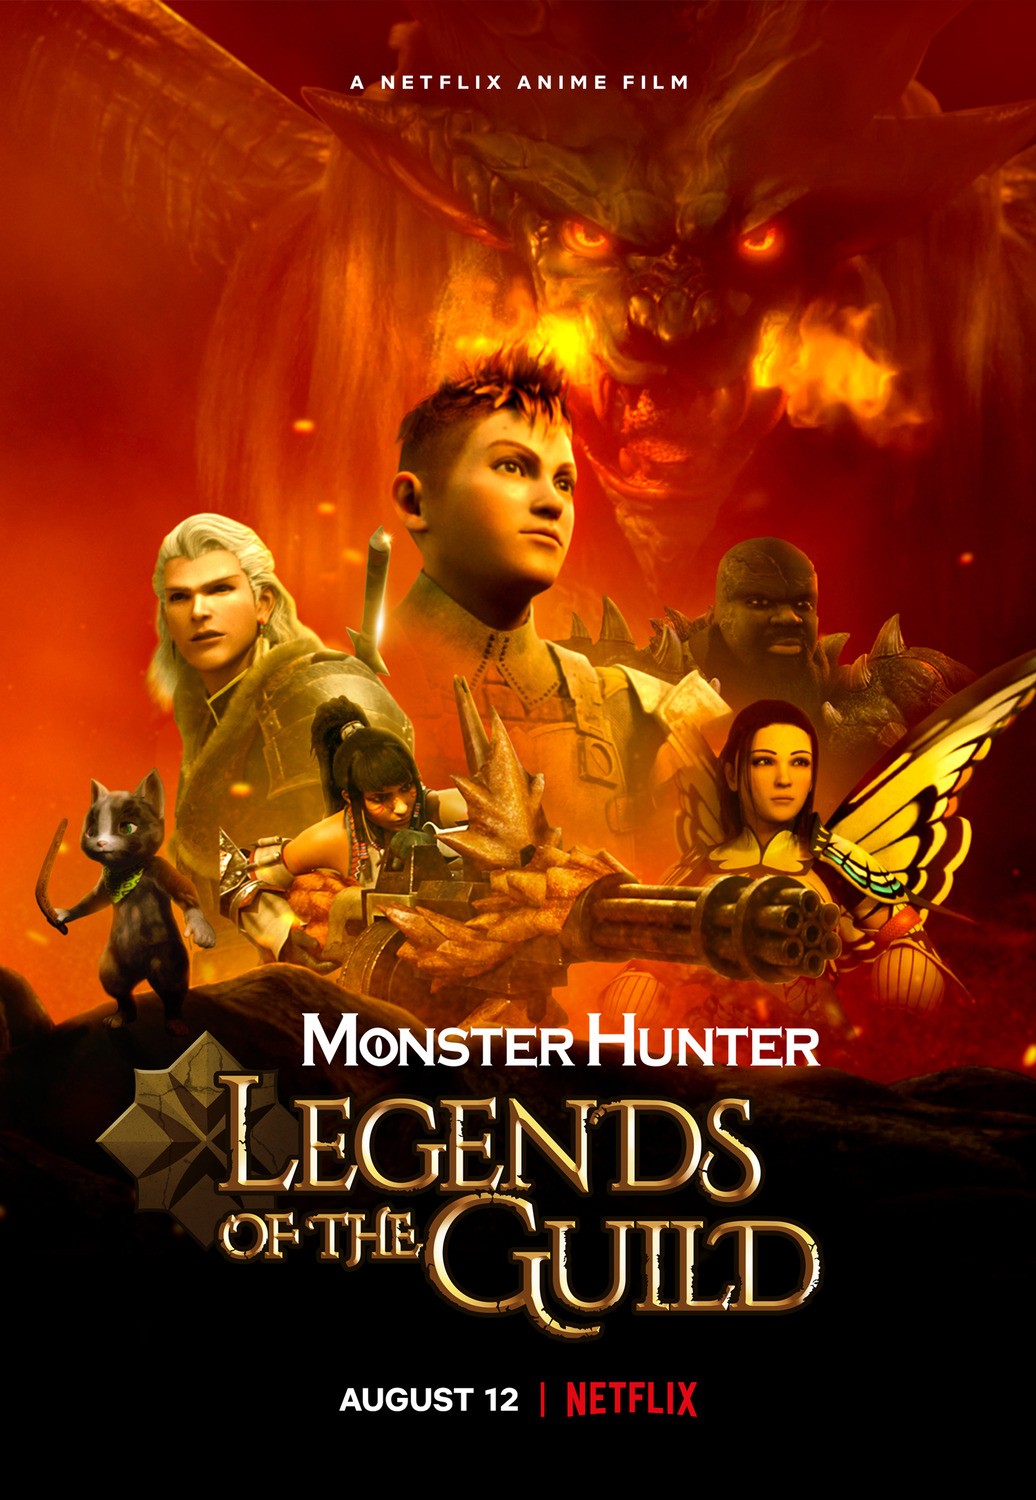 Monster Hunter: Легенды гильдии / Monster Hunter: Legends of the Guild (2021) отзывы. Рецензии. Новости кино. Актеры фильма Monster Hunter: Легенды гильдии. Отзывы о фильме Monster Hunter: Легенды гильдии